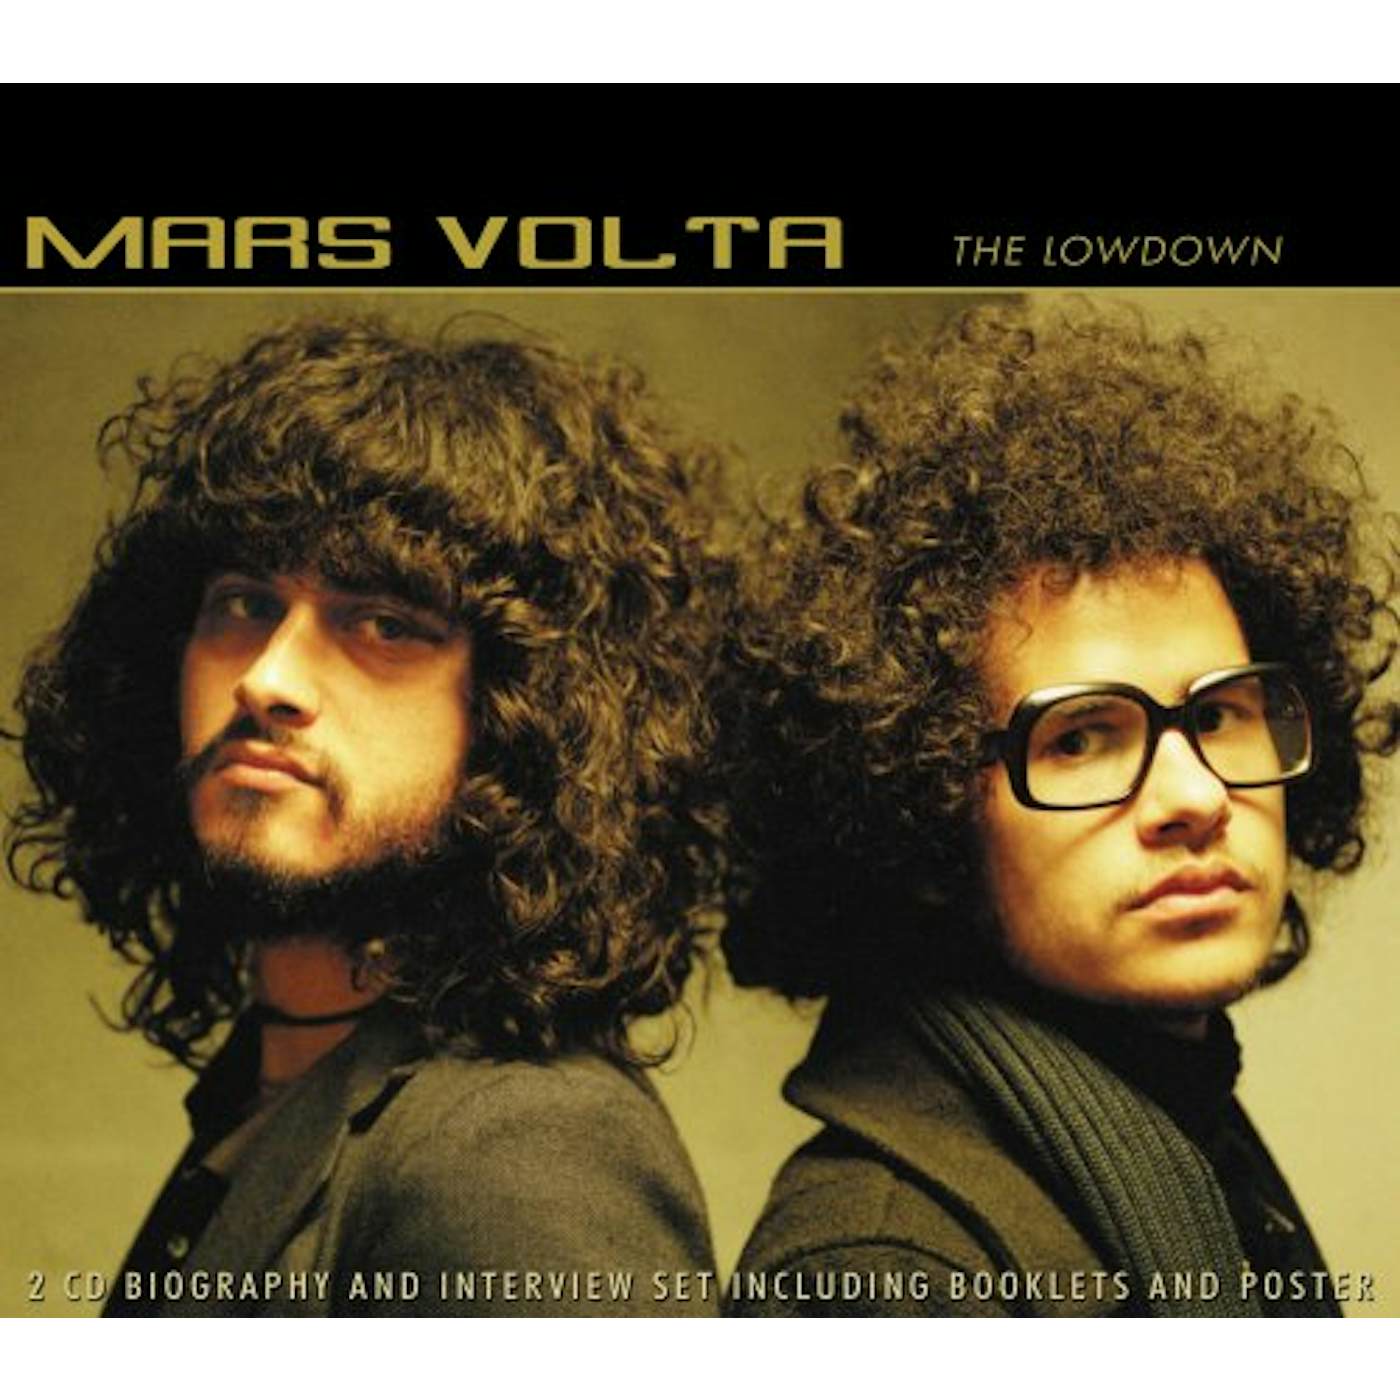 The Mars Volta LOWDOWN UNAUTHORIZED CD